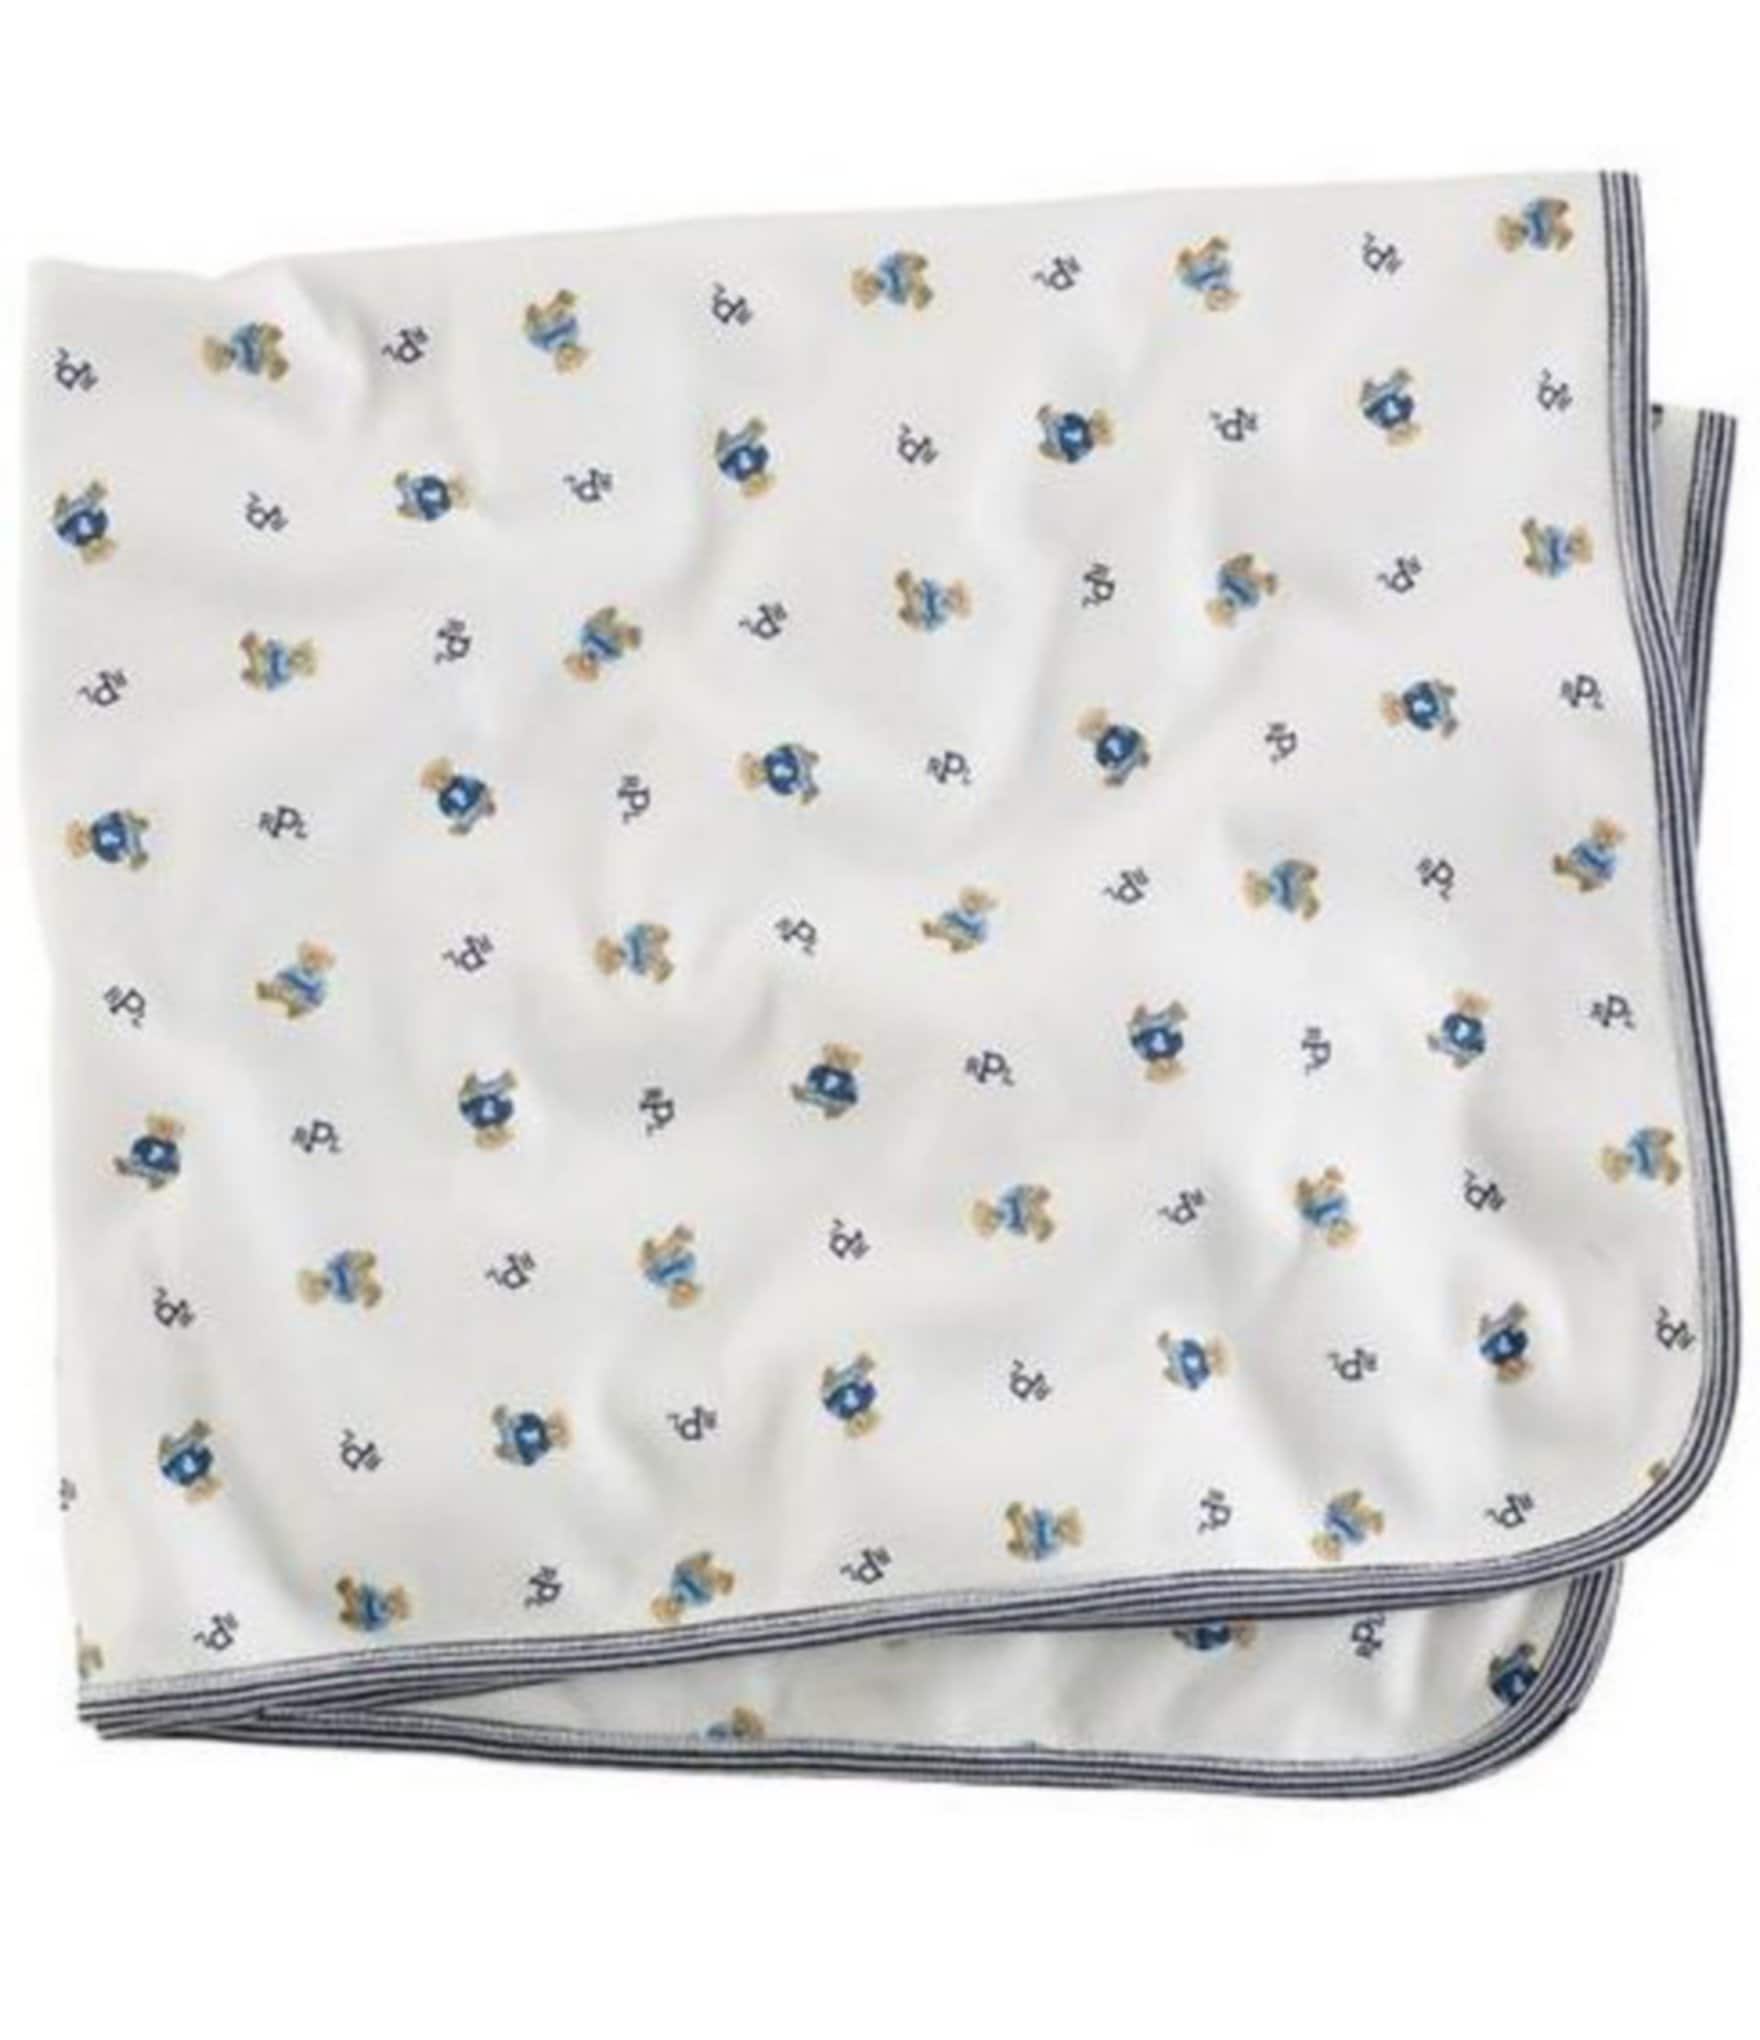 Ralph Lauren Childrenswear Reversible Printed Receiving Blanket Dillards